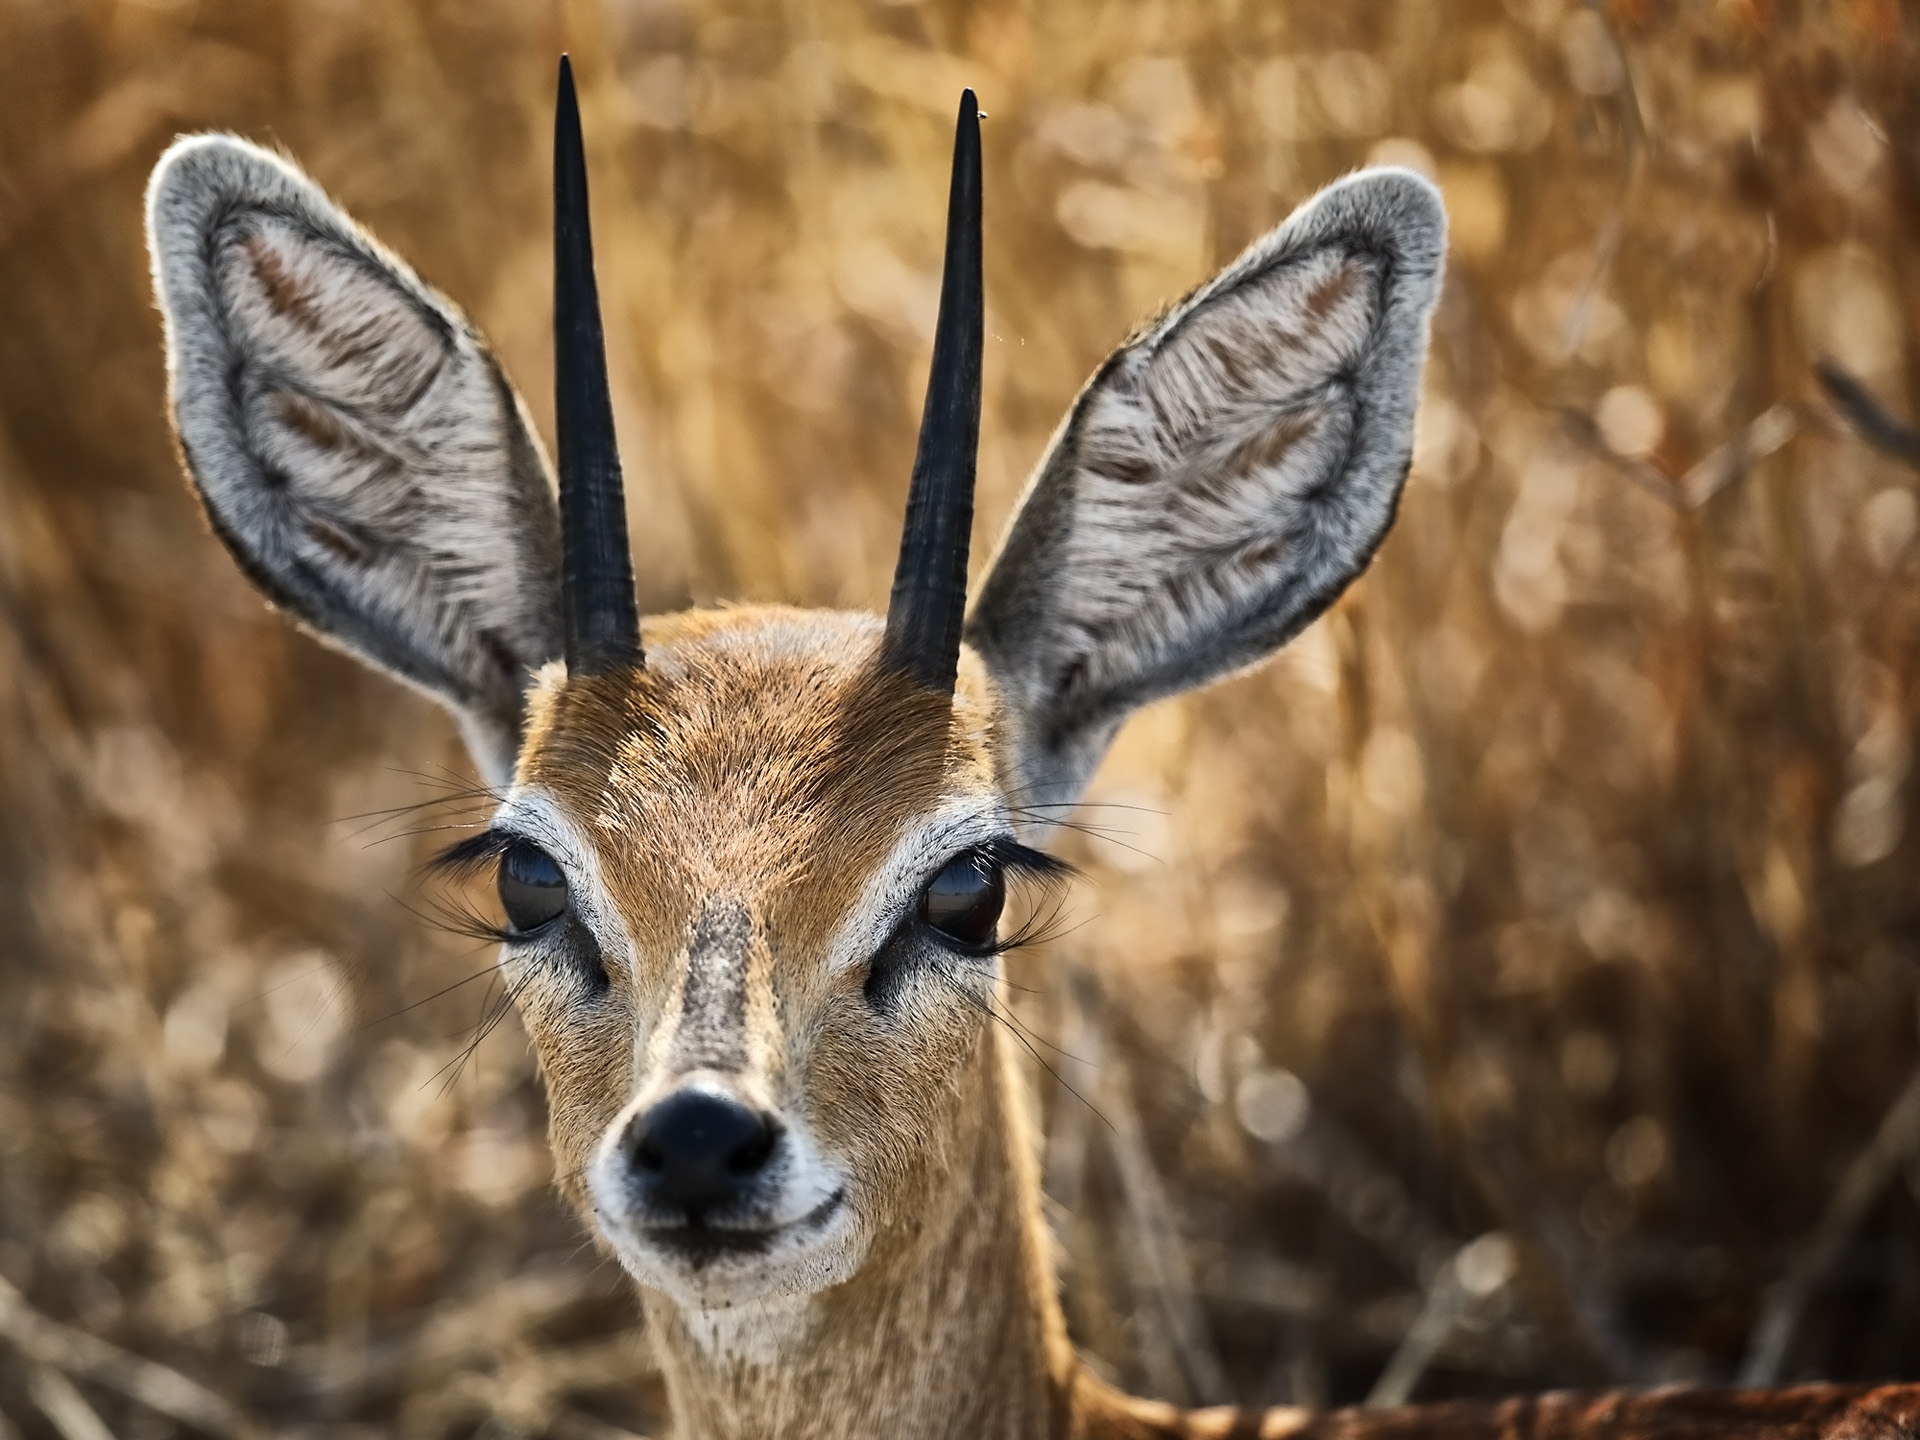 Animals from the Kalahari - Marco Nagel Wildlife & Nature Photography